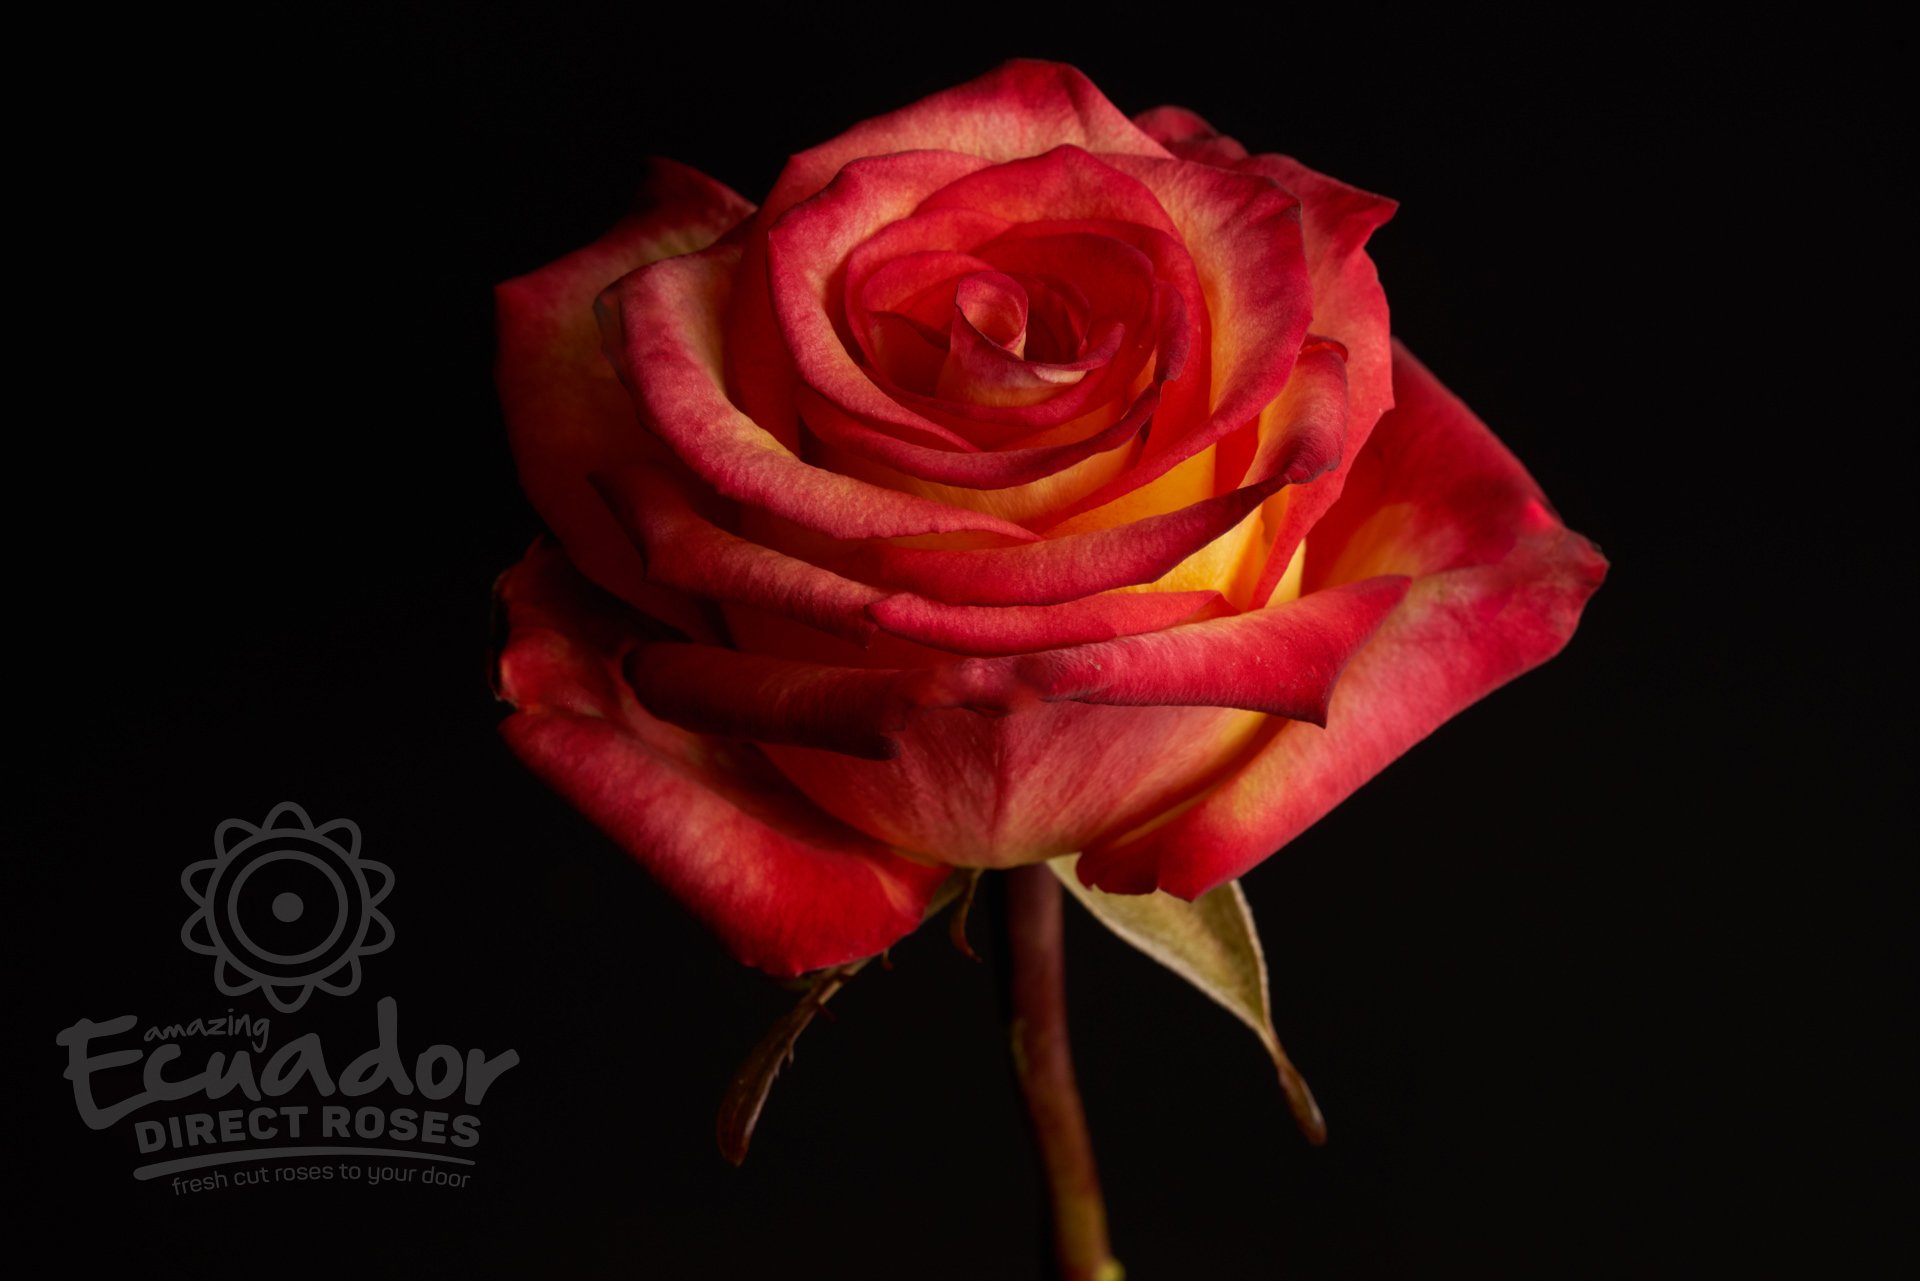 HIGH & MAGIC - Bicolor Yellow and Red Rose | Ecuador Direct Roses